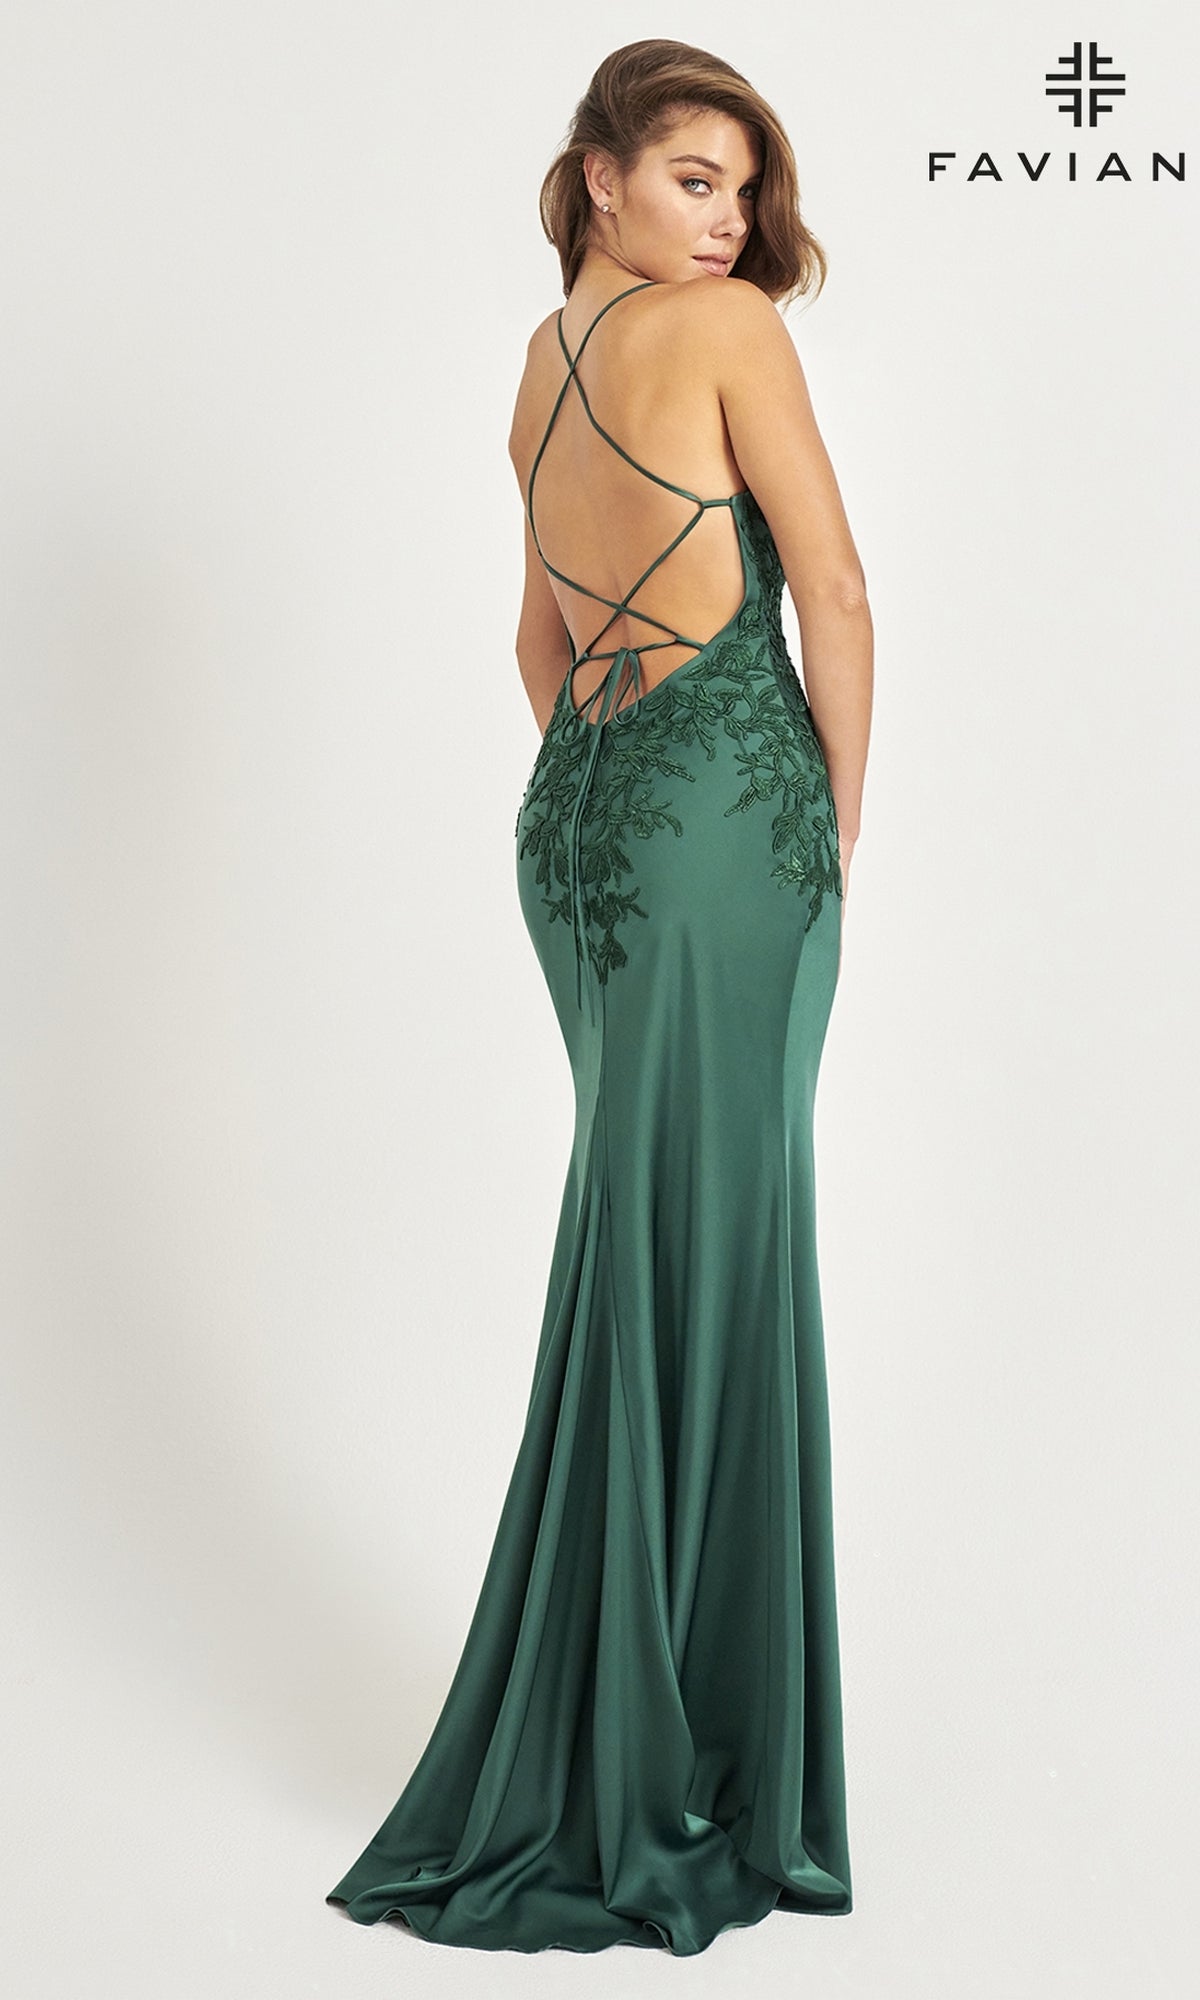  Long Formal Dress 11070 by Faviana